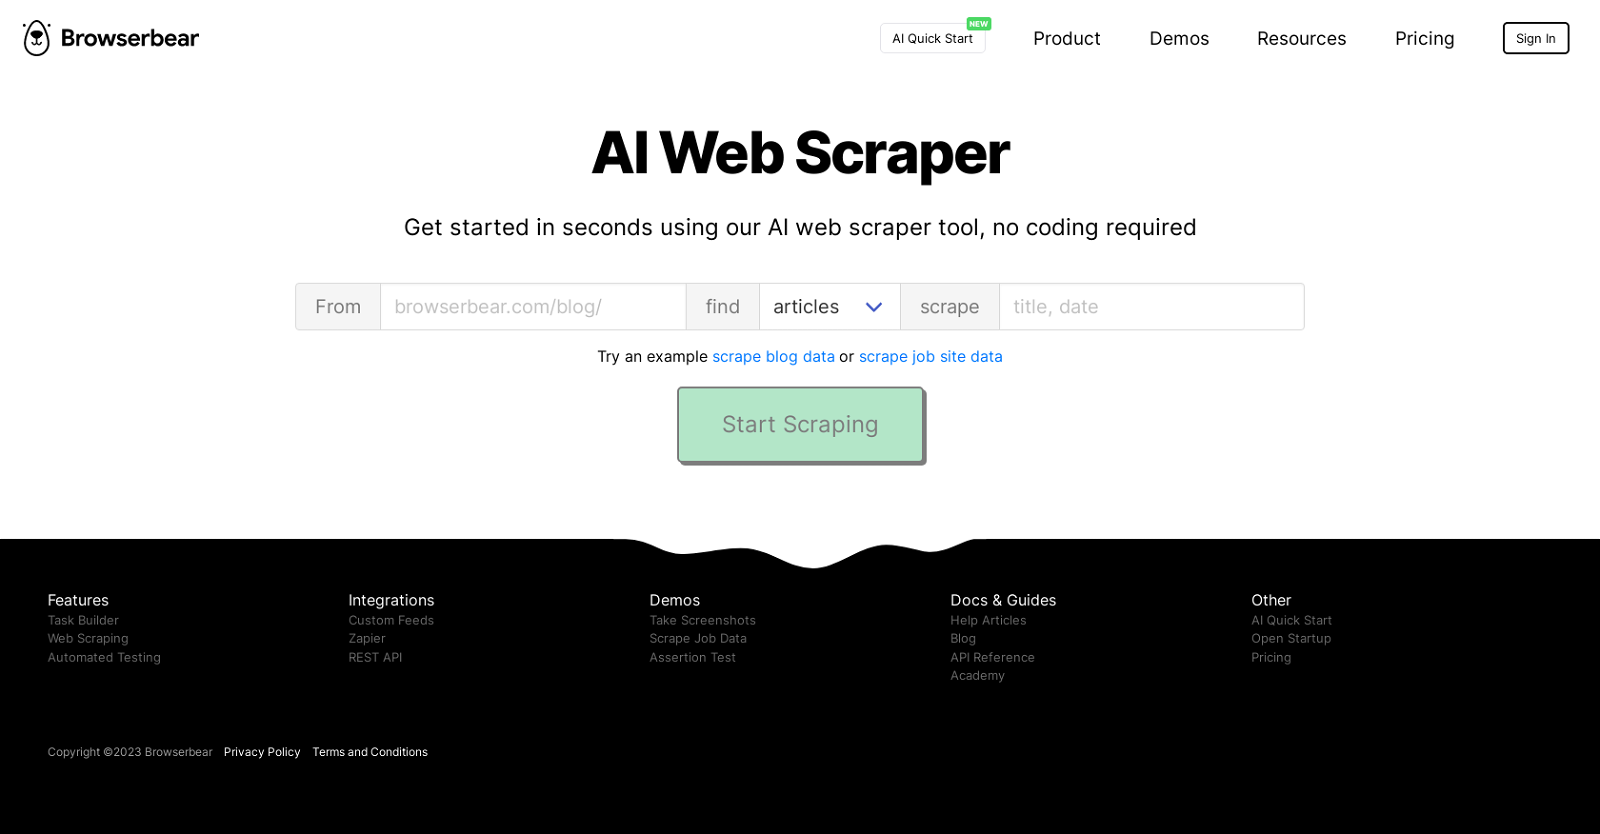 Browserbear website